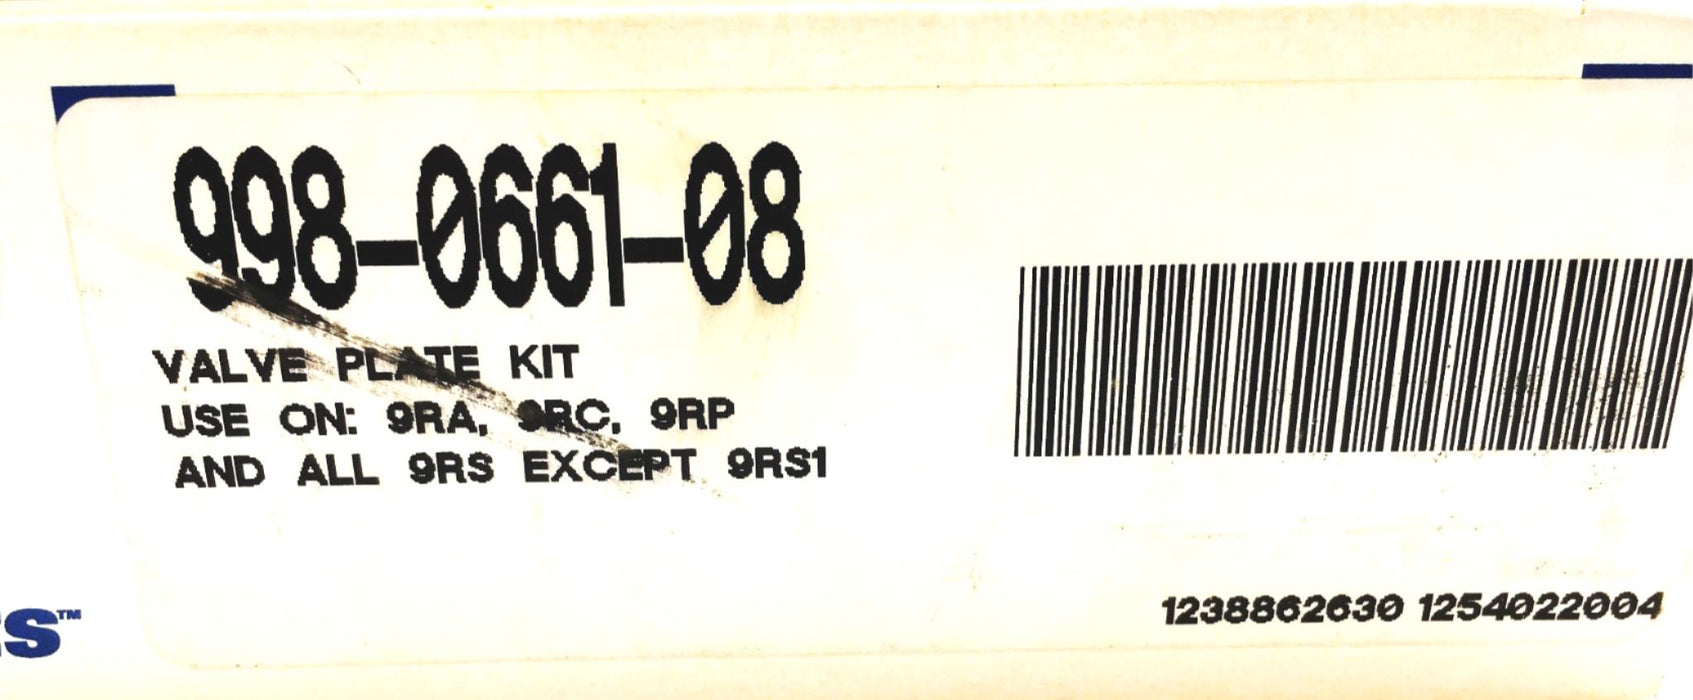 Copeland Valve Plate Kit 998-0661-08 NOS